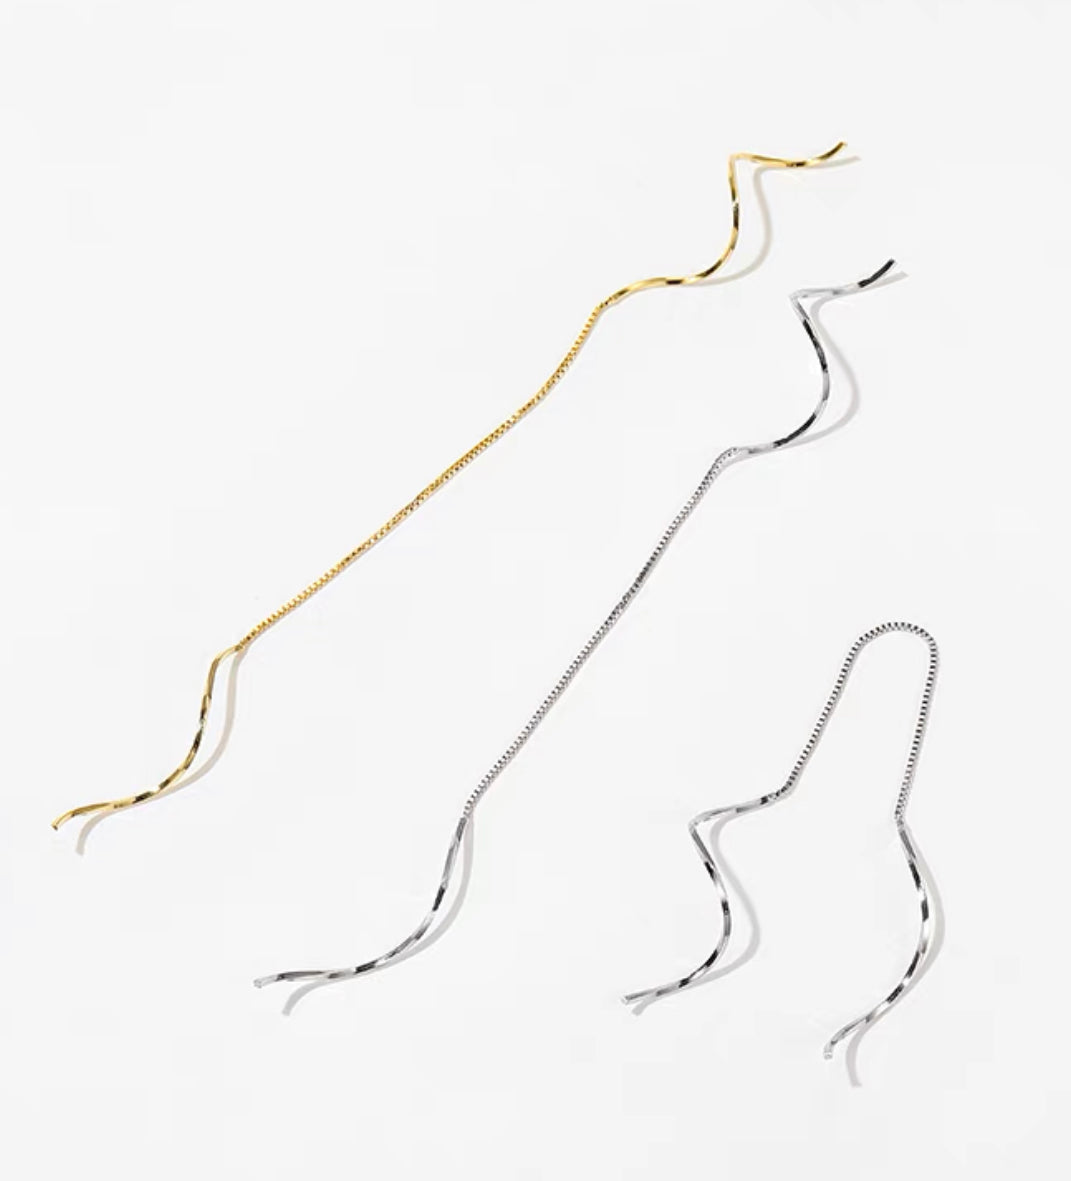 Gold Plated Swirl Thread Earrings